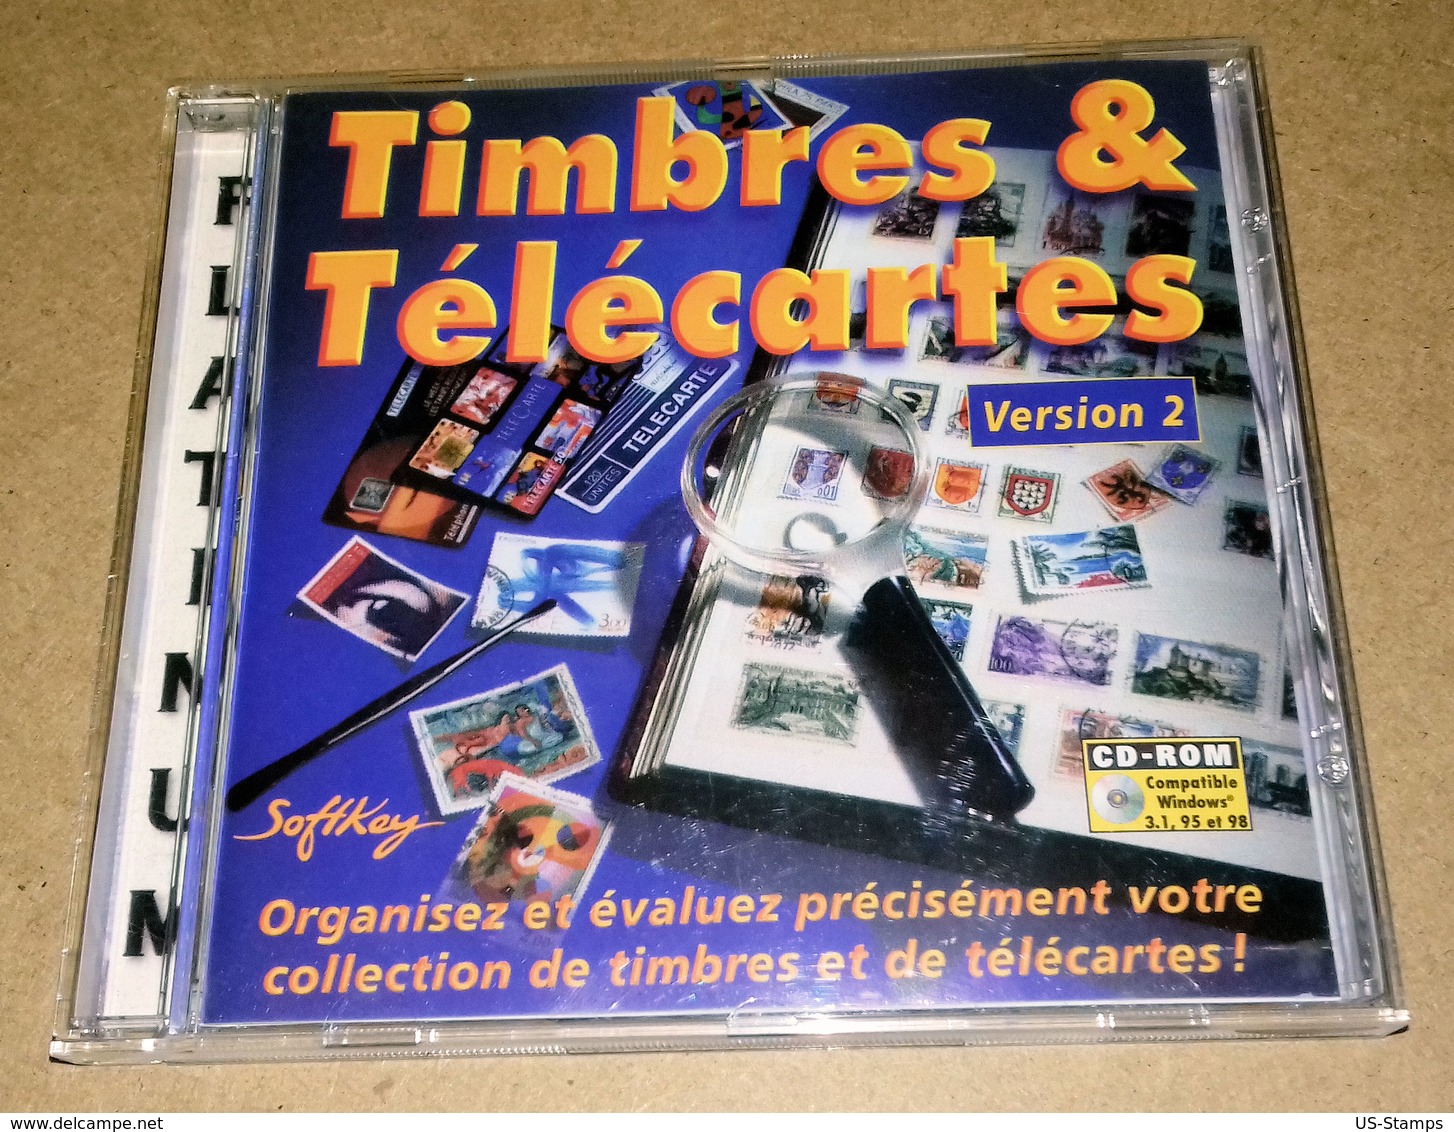 CD Timbres Et Télécartes Version 2 (SoftKey) - Frans